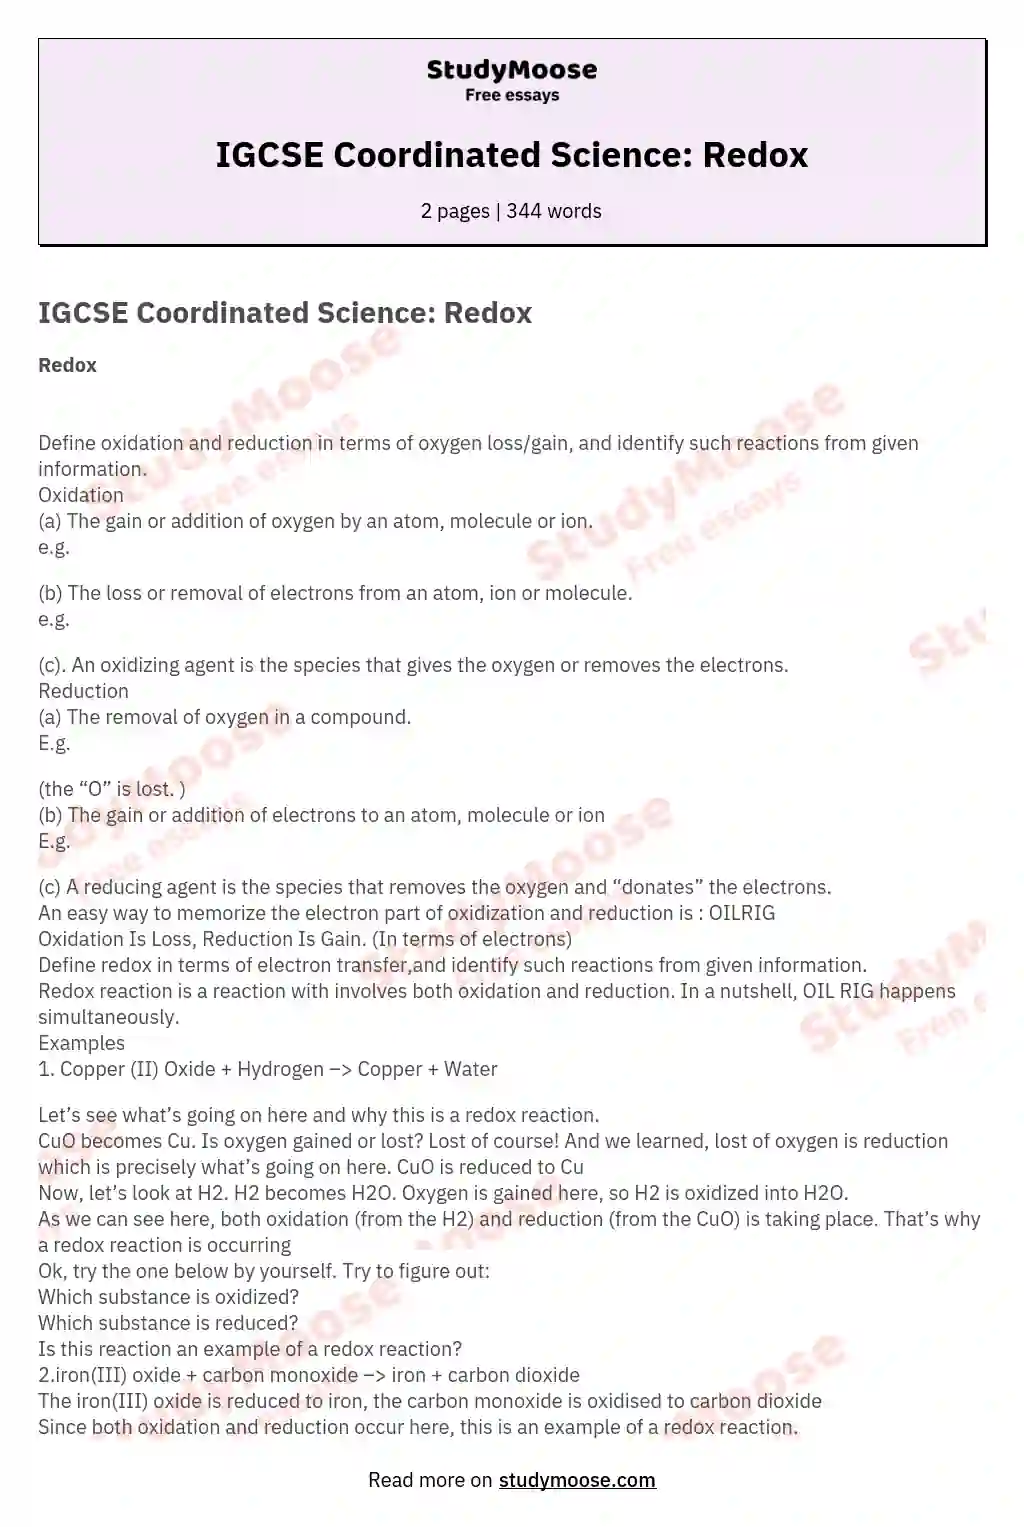 IGCSE Coordinated Science: Redox essay